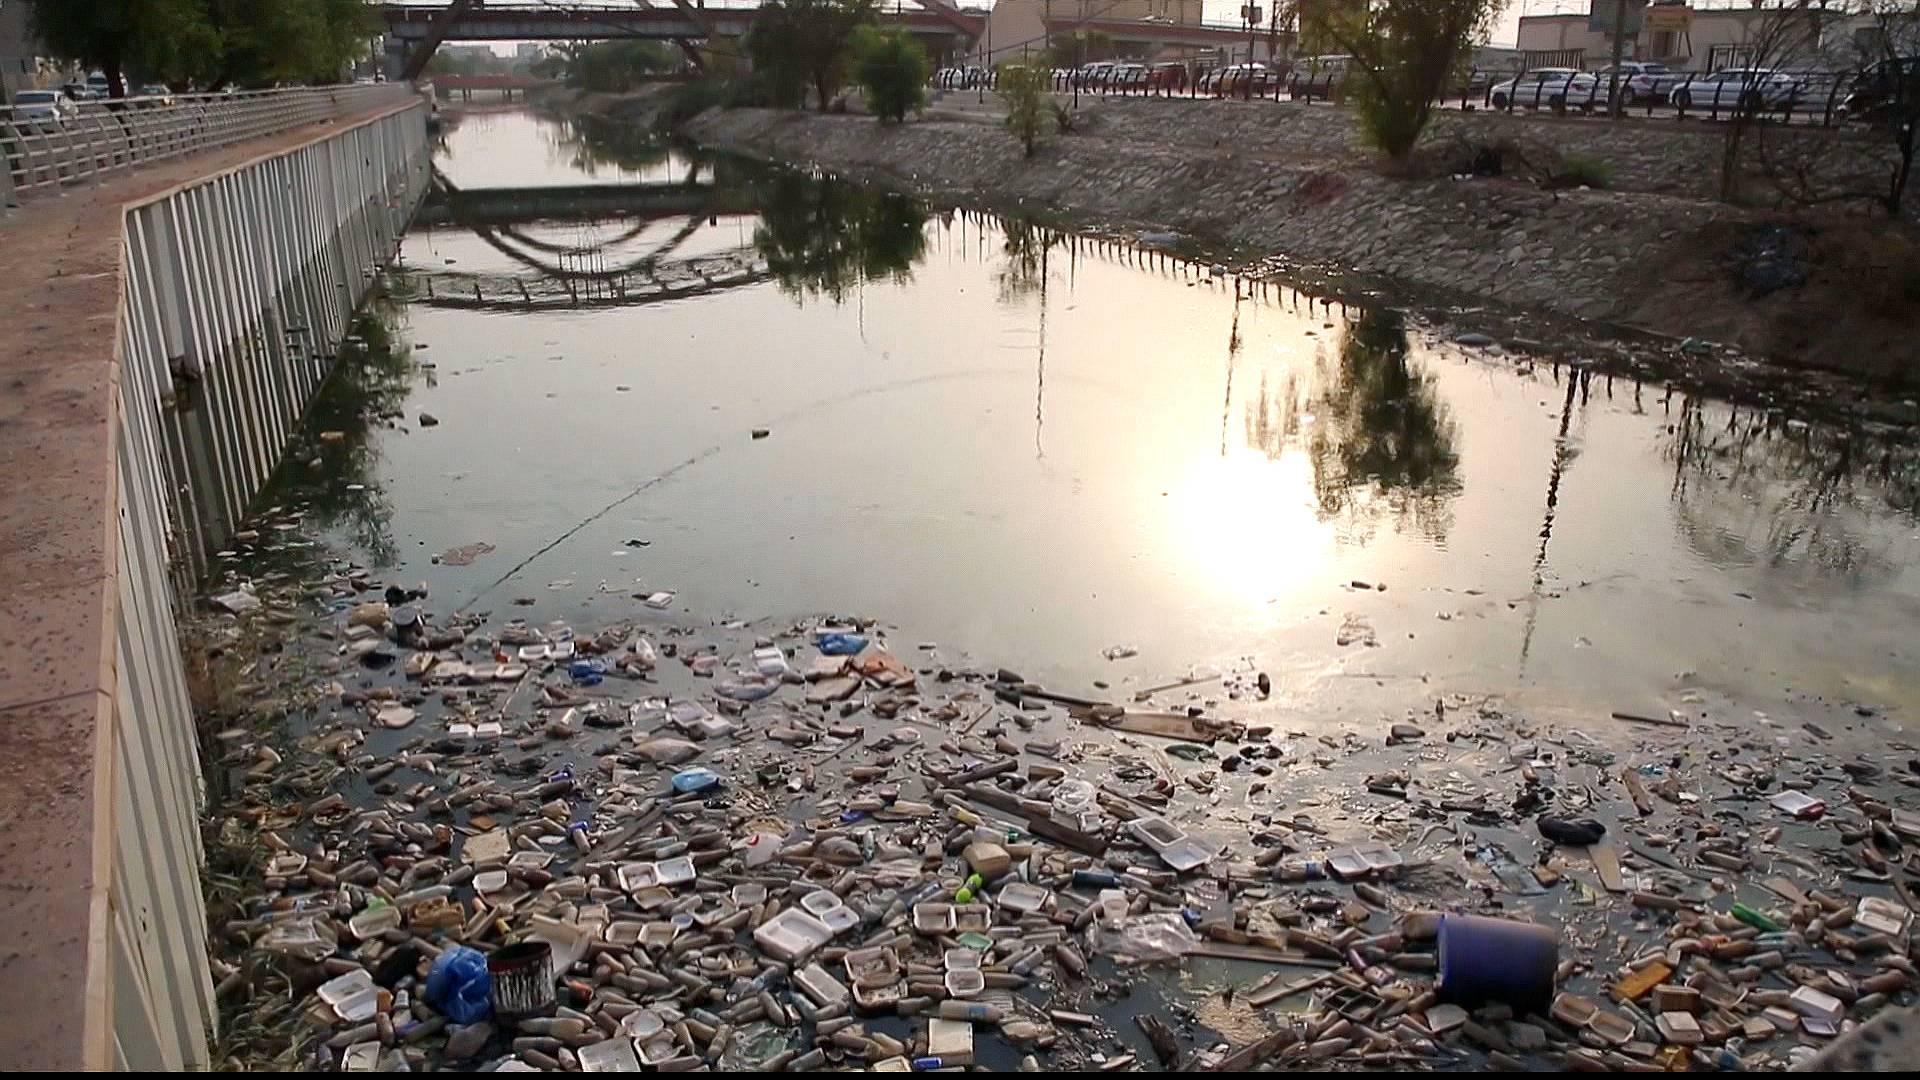 Iraq: Basra water pollution risks triggering disease